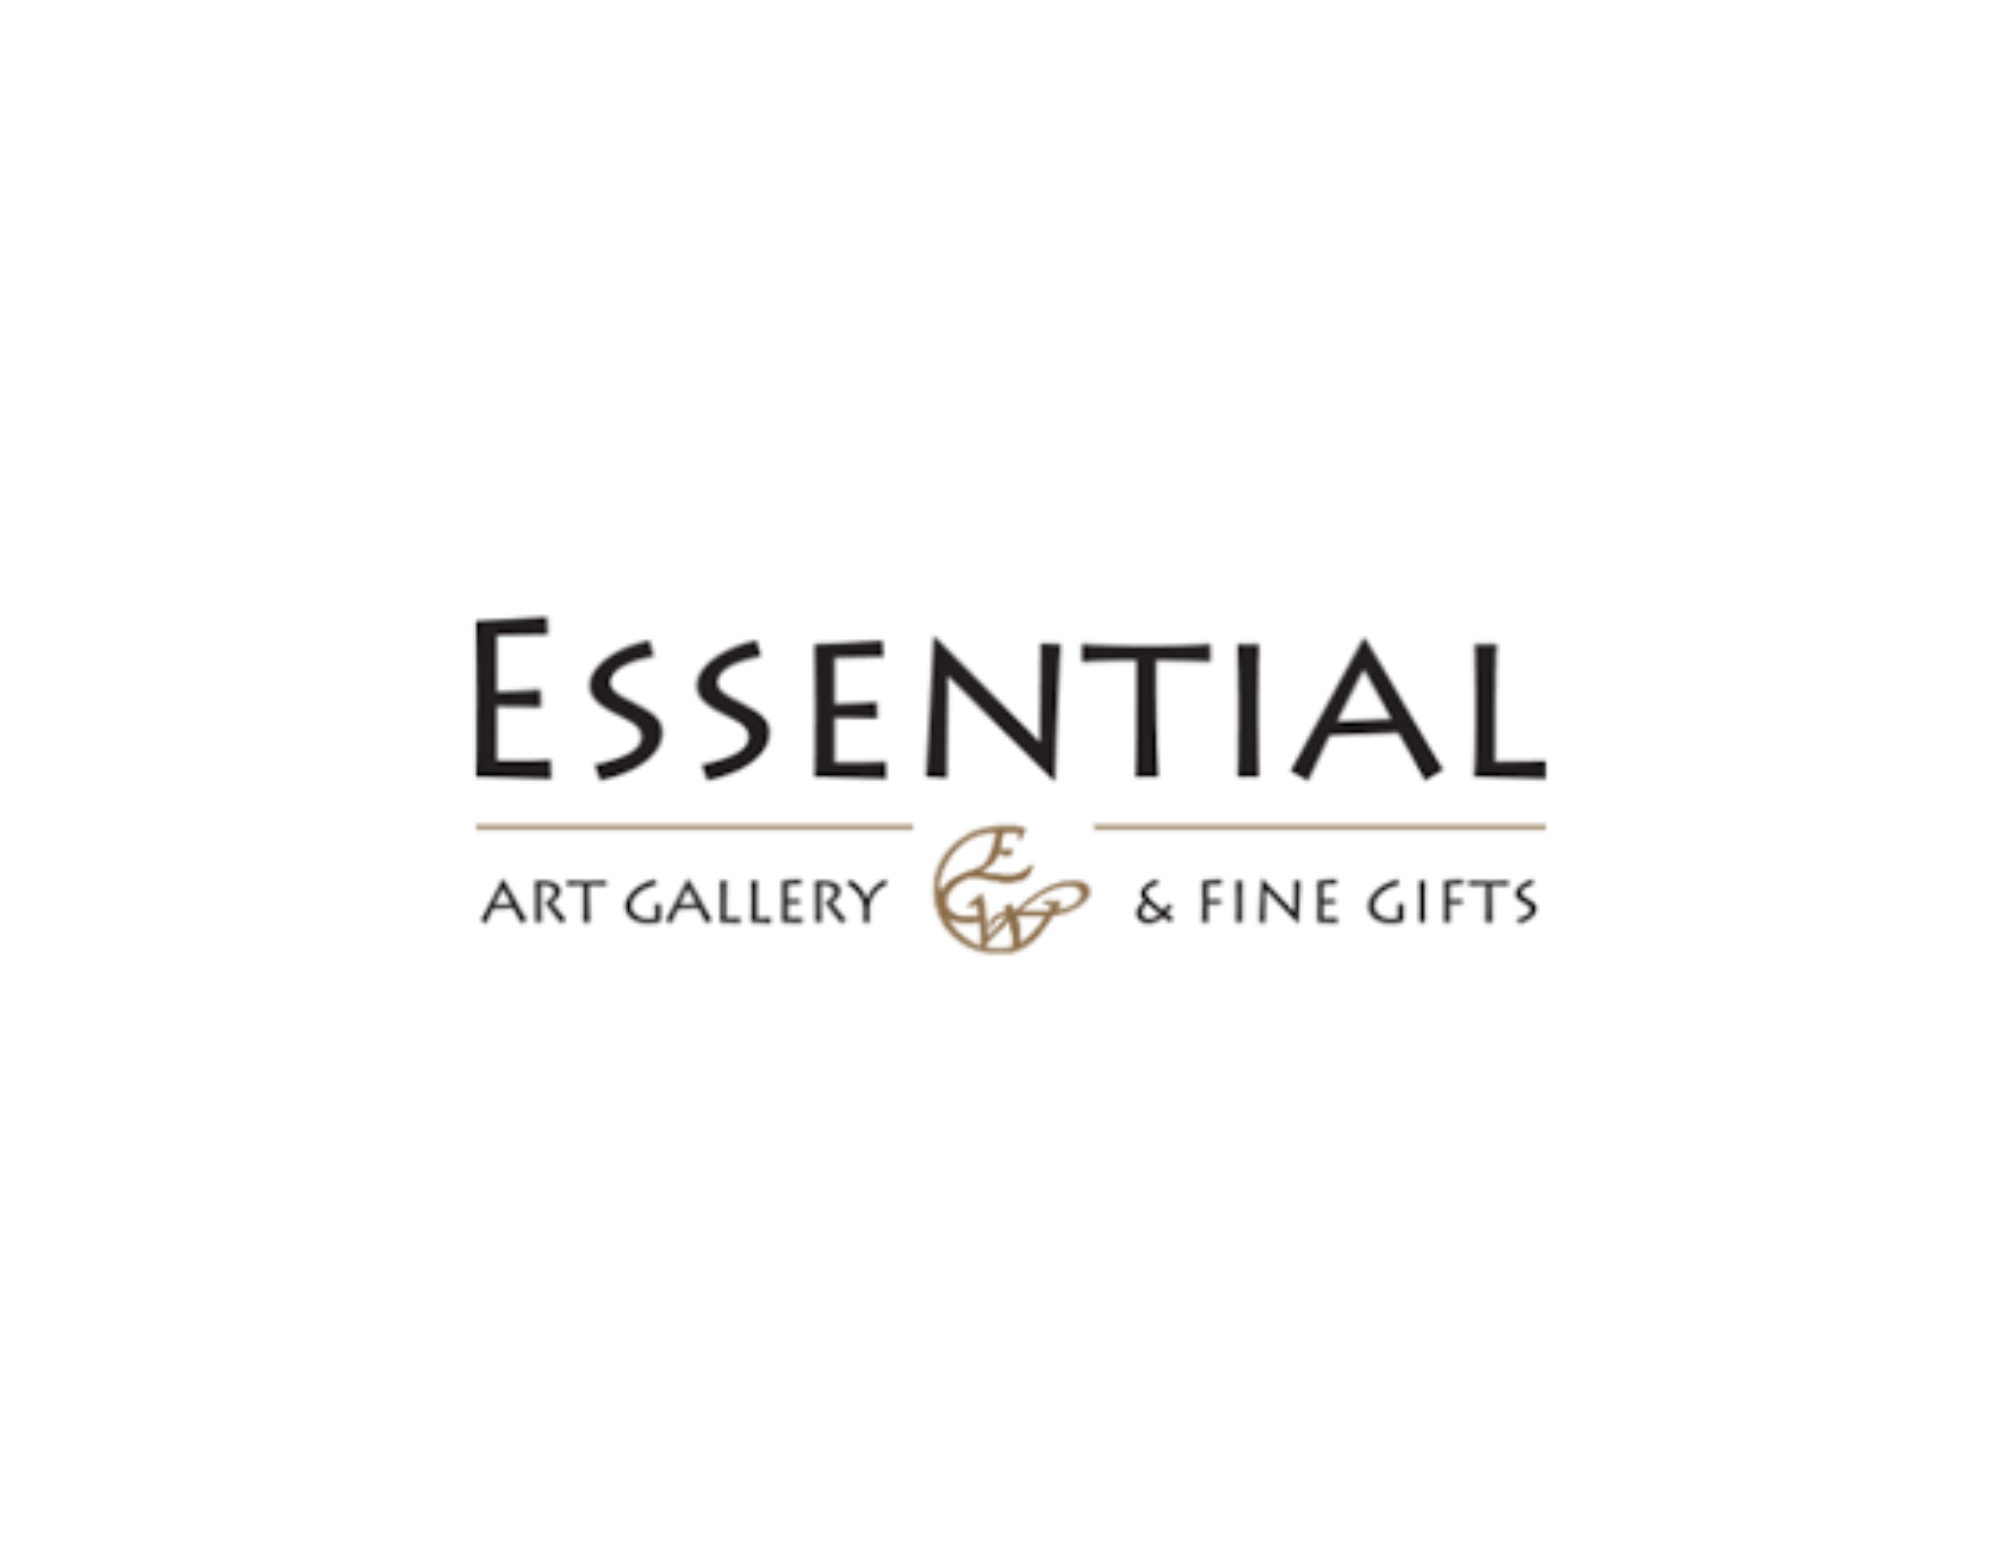 Essential Art Gallery & Fine Gifts